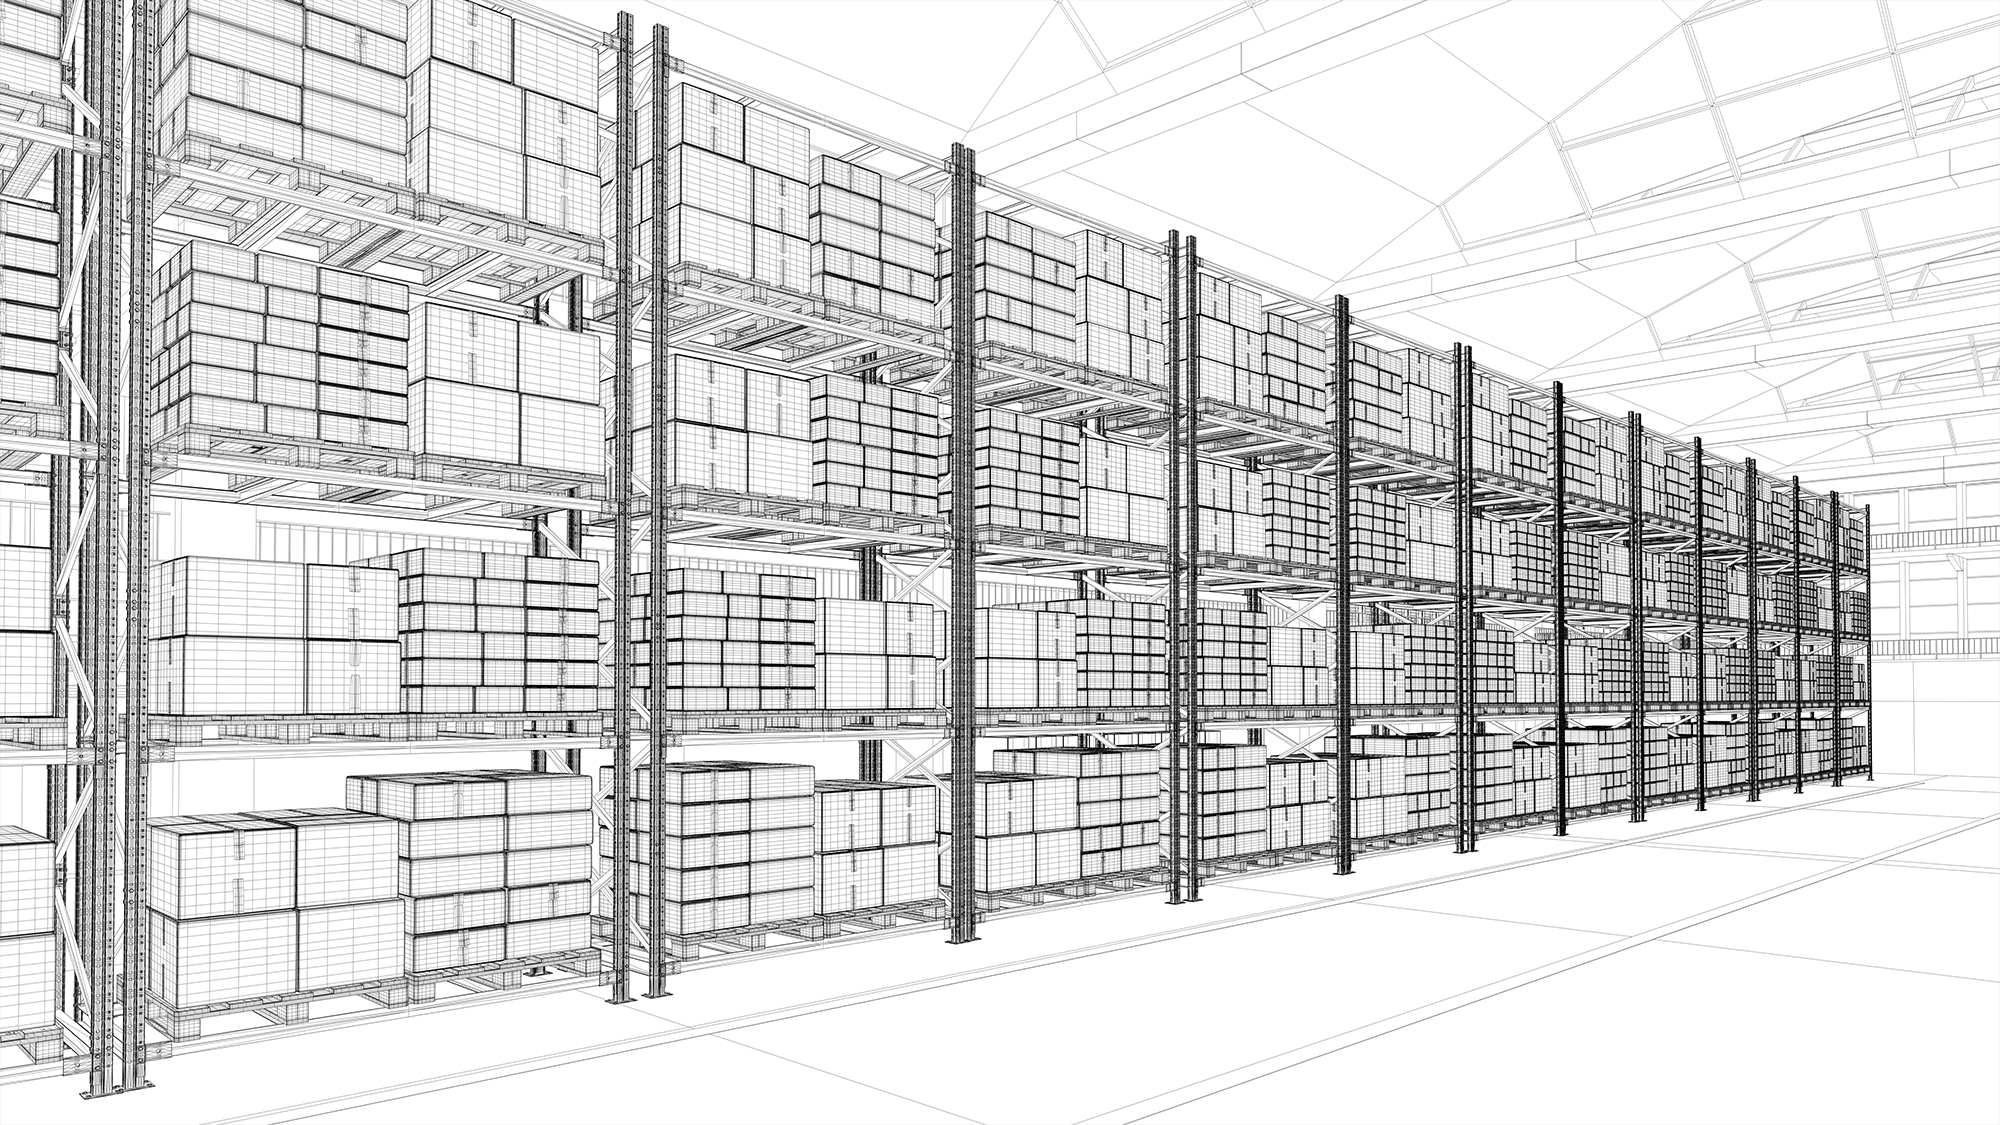 Sketch of warehouse racks using CAD